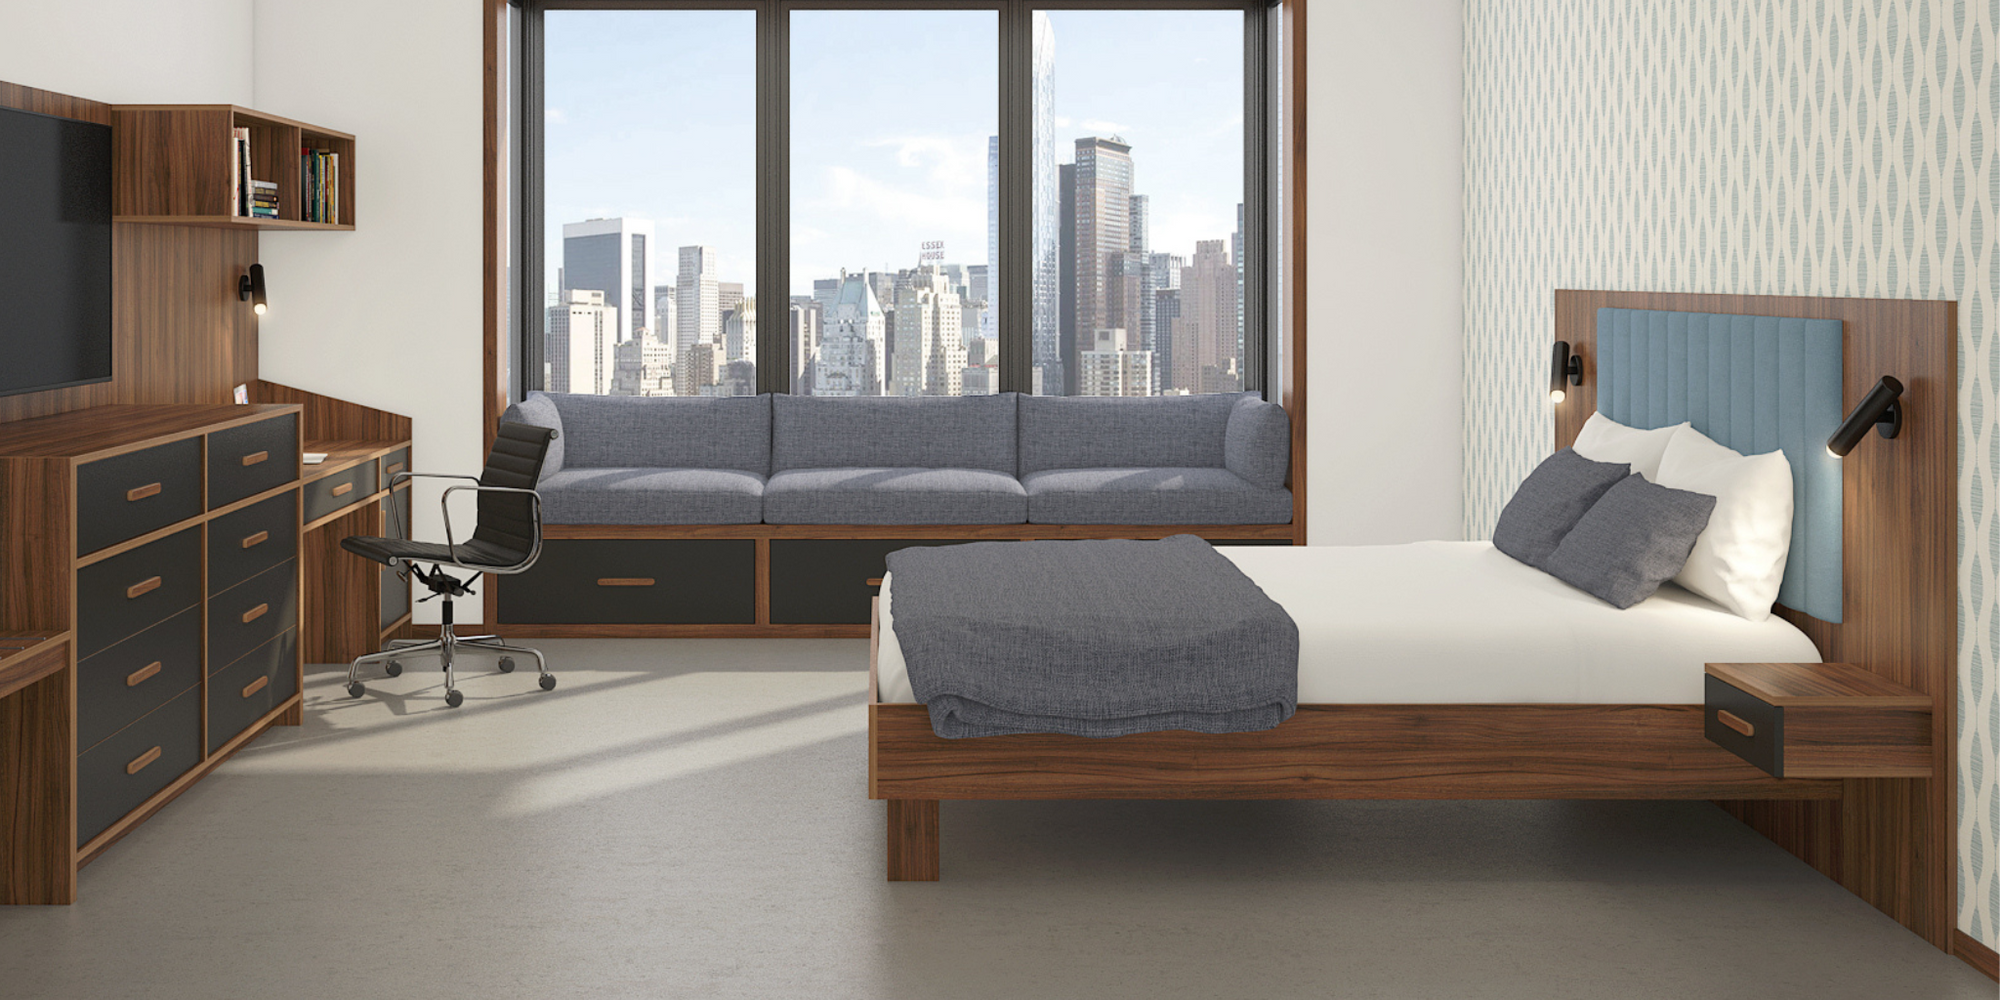 custom bed with upholstered headboard, custom dresser and desk unit